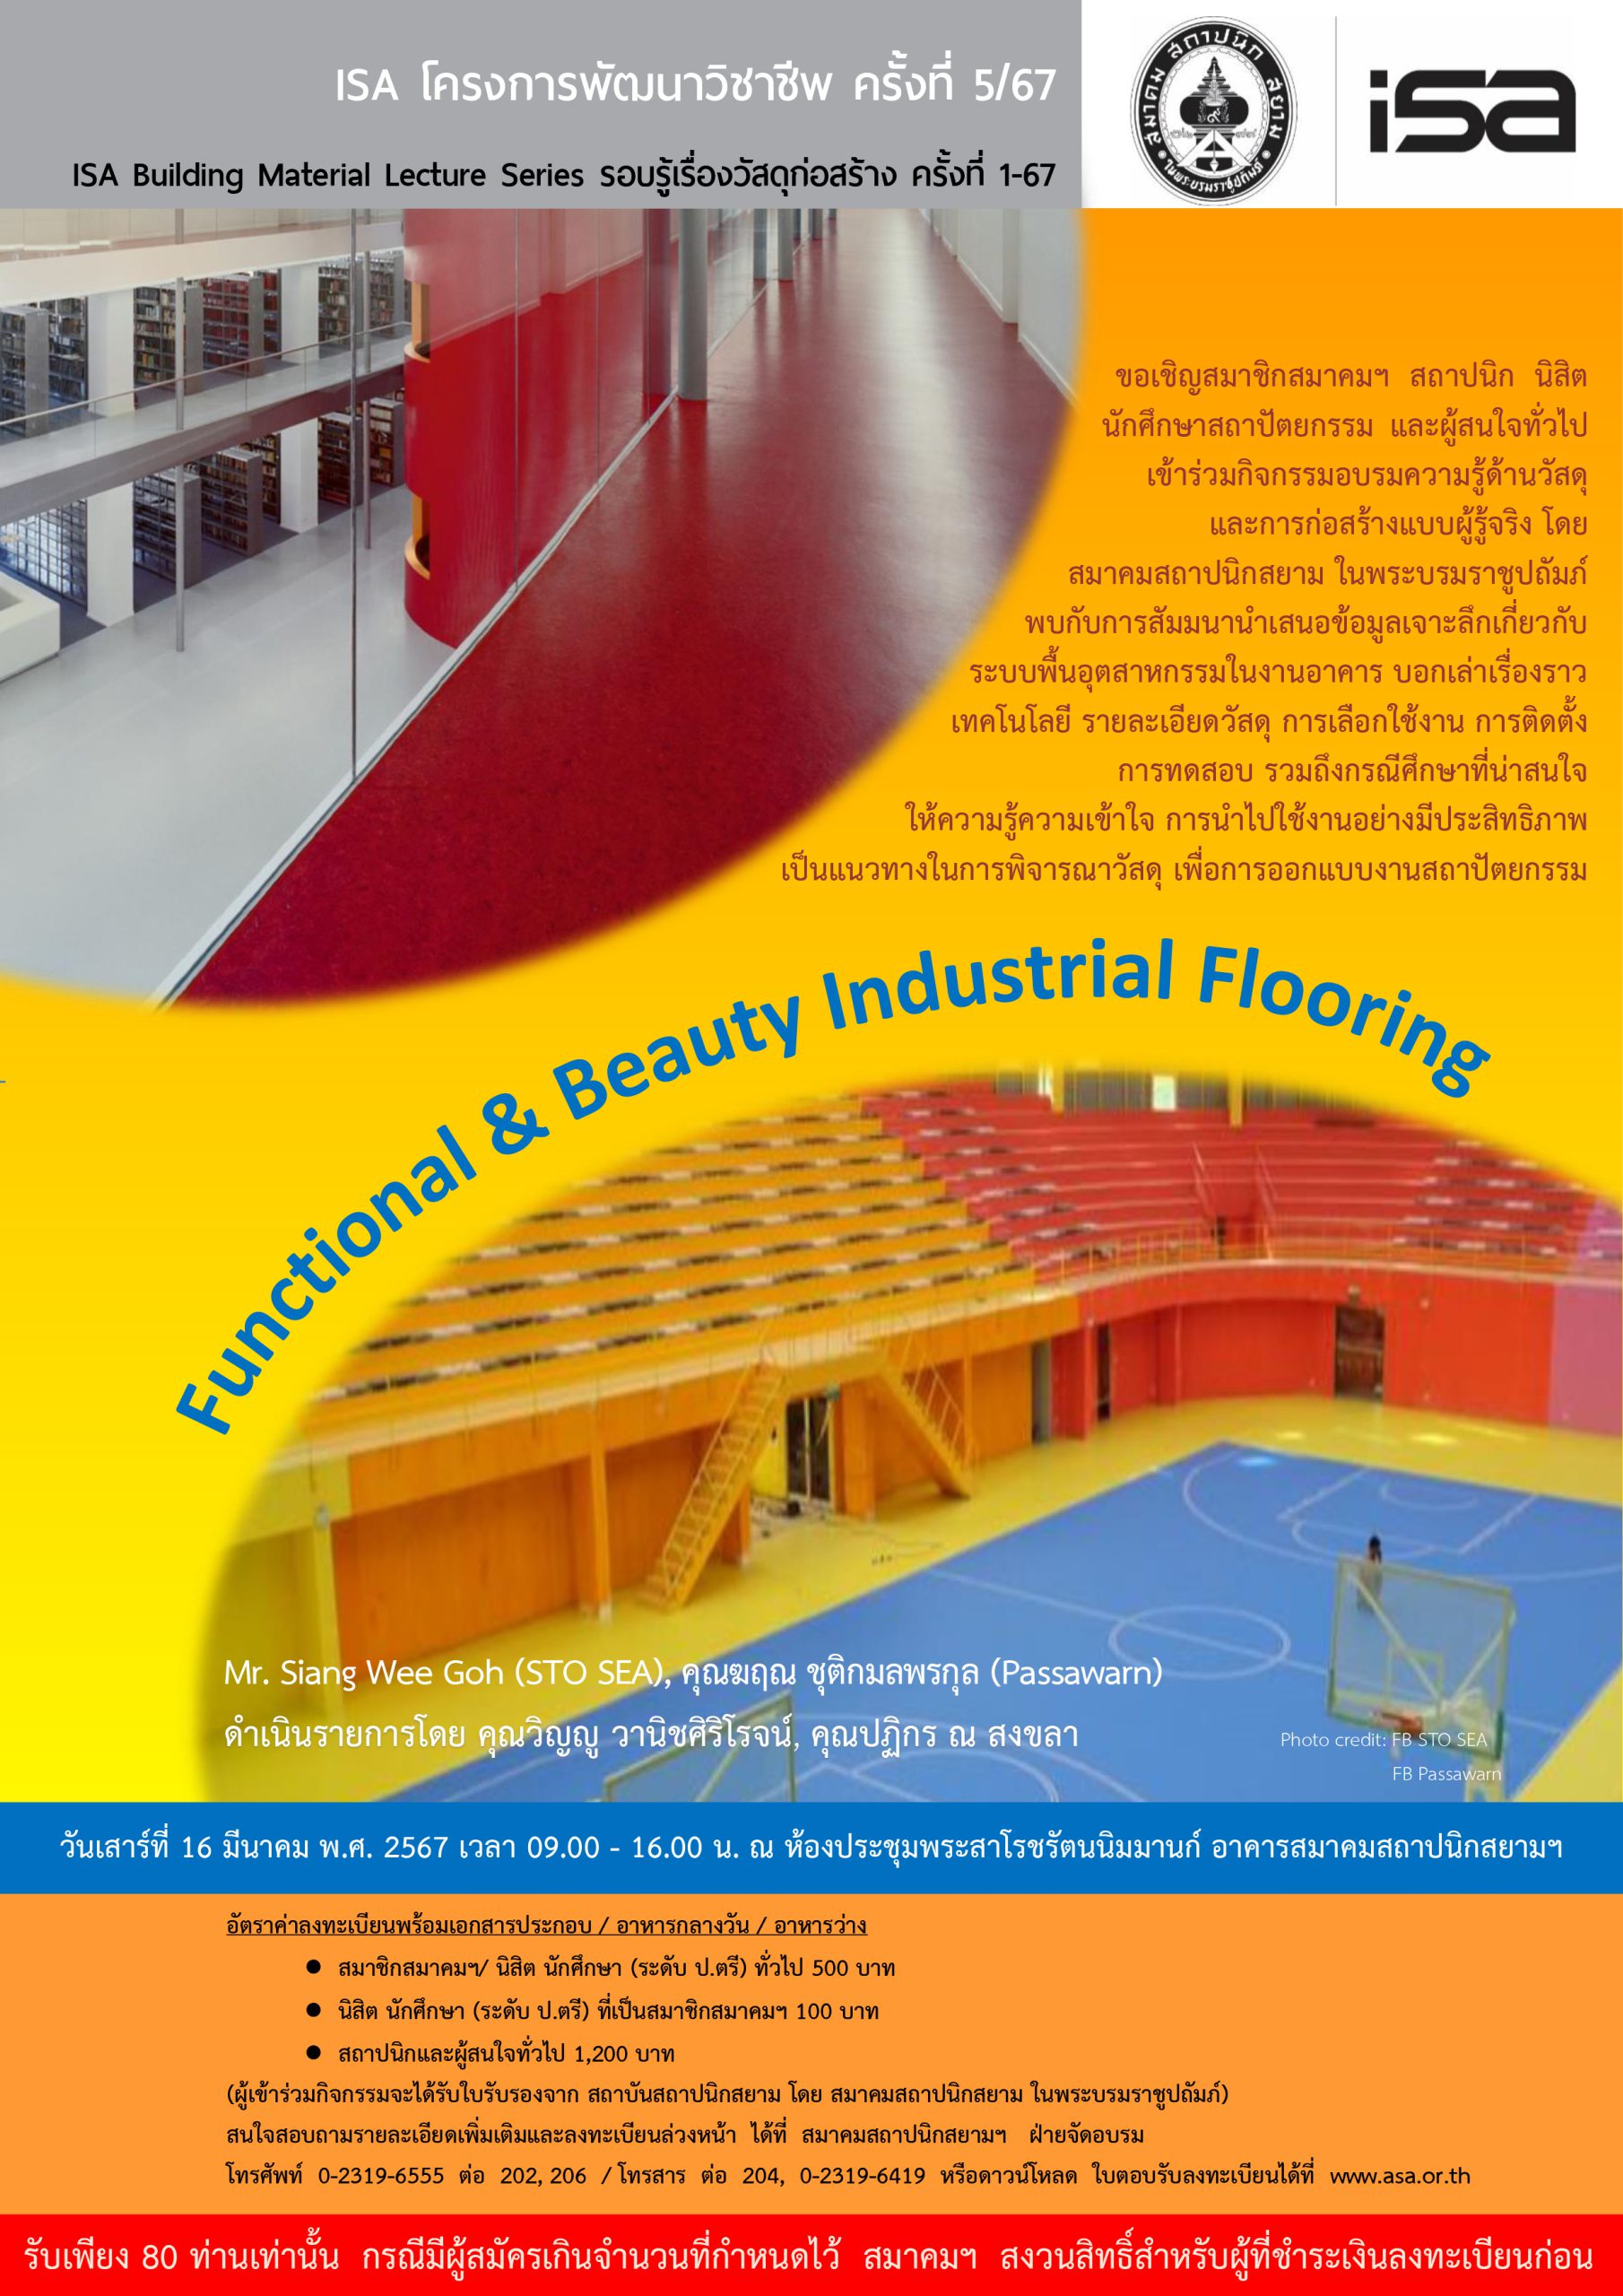 ISA โครงการพัฒนาวิชาชีพ ครั้งที่ 5/67 “Functional & Beauty Industrial Flooring “